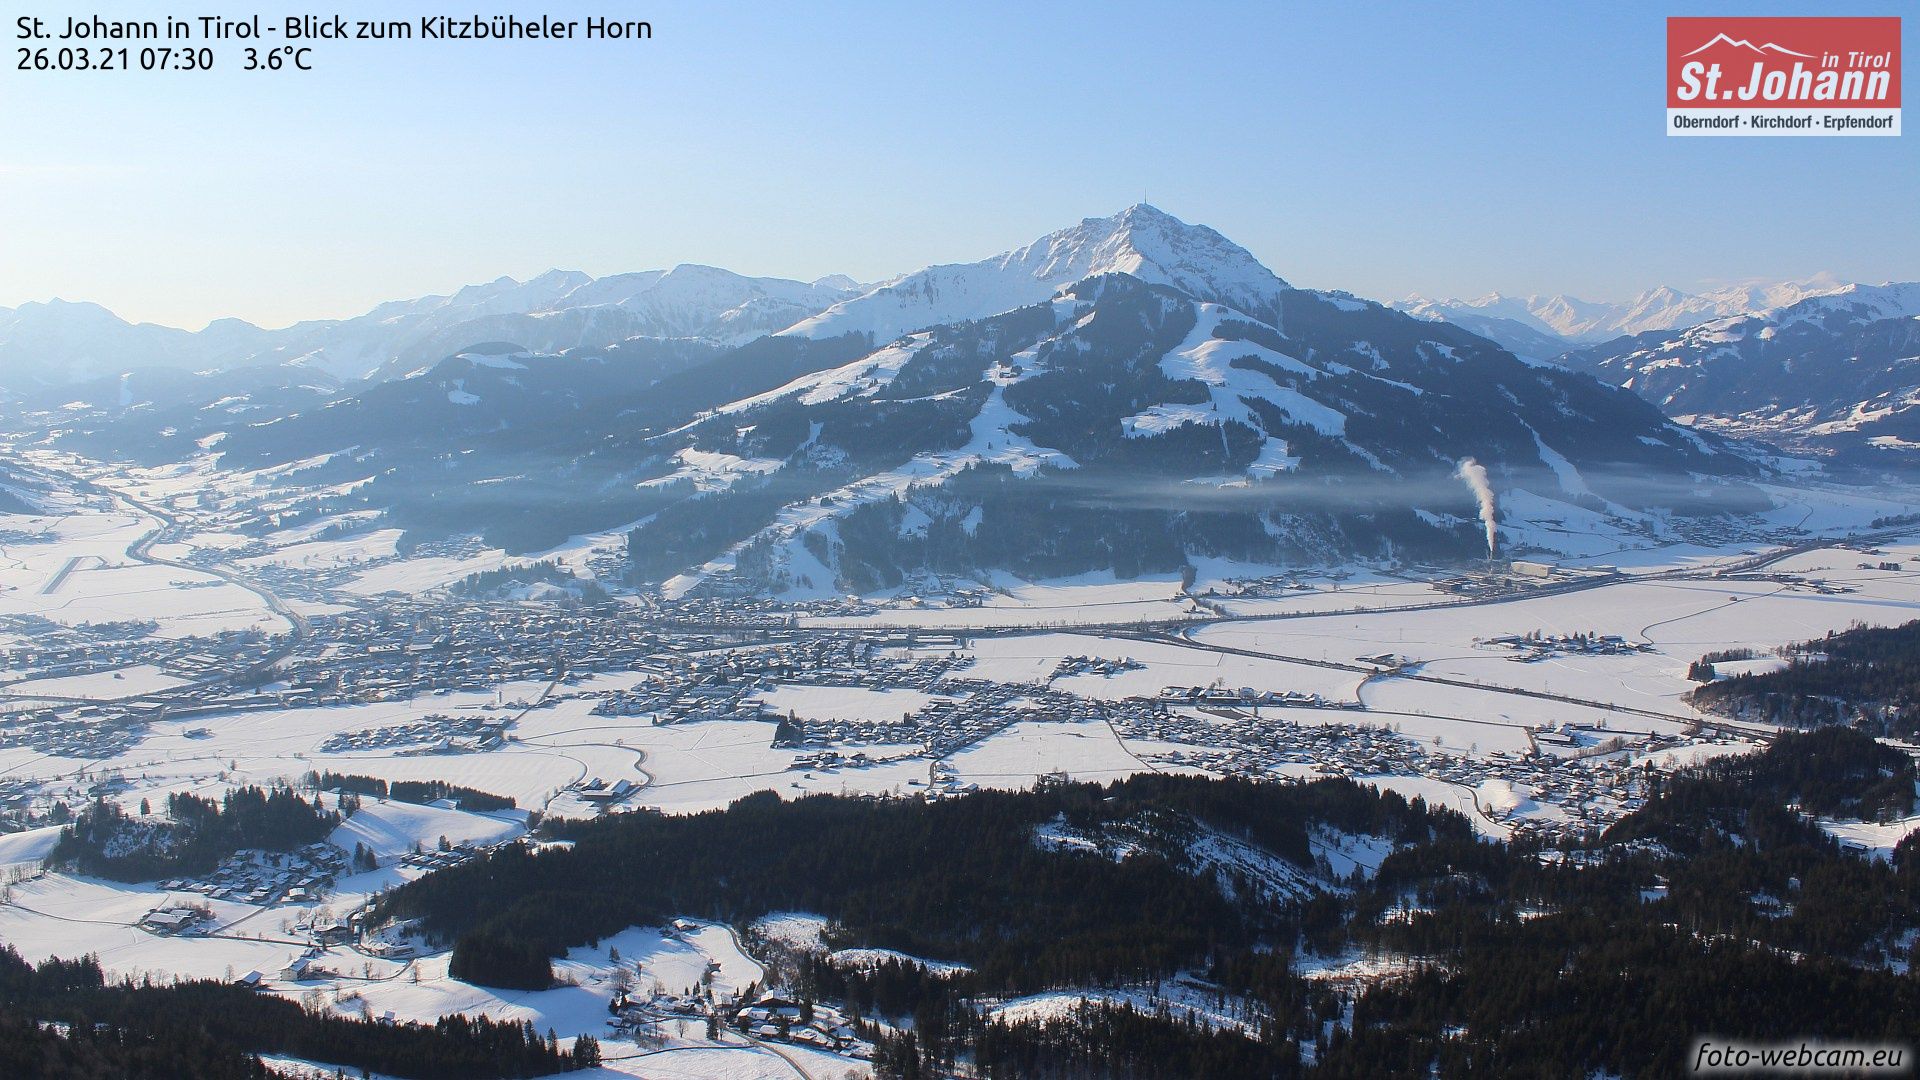 In the Kitzbüheler Alpen it is still white down to the valleys (foto-webcam.eu)